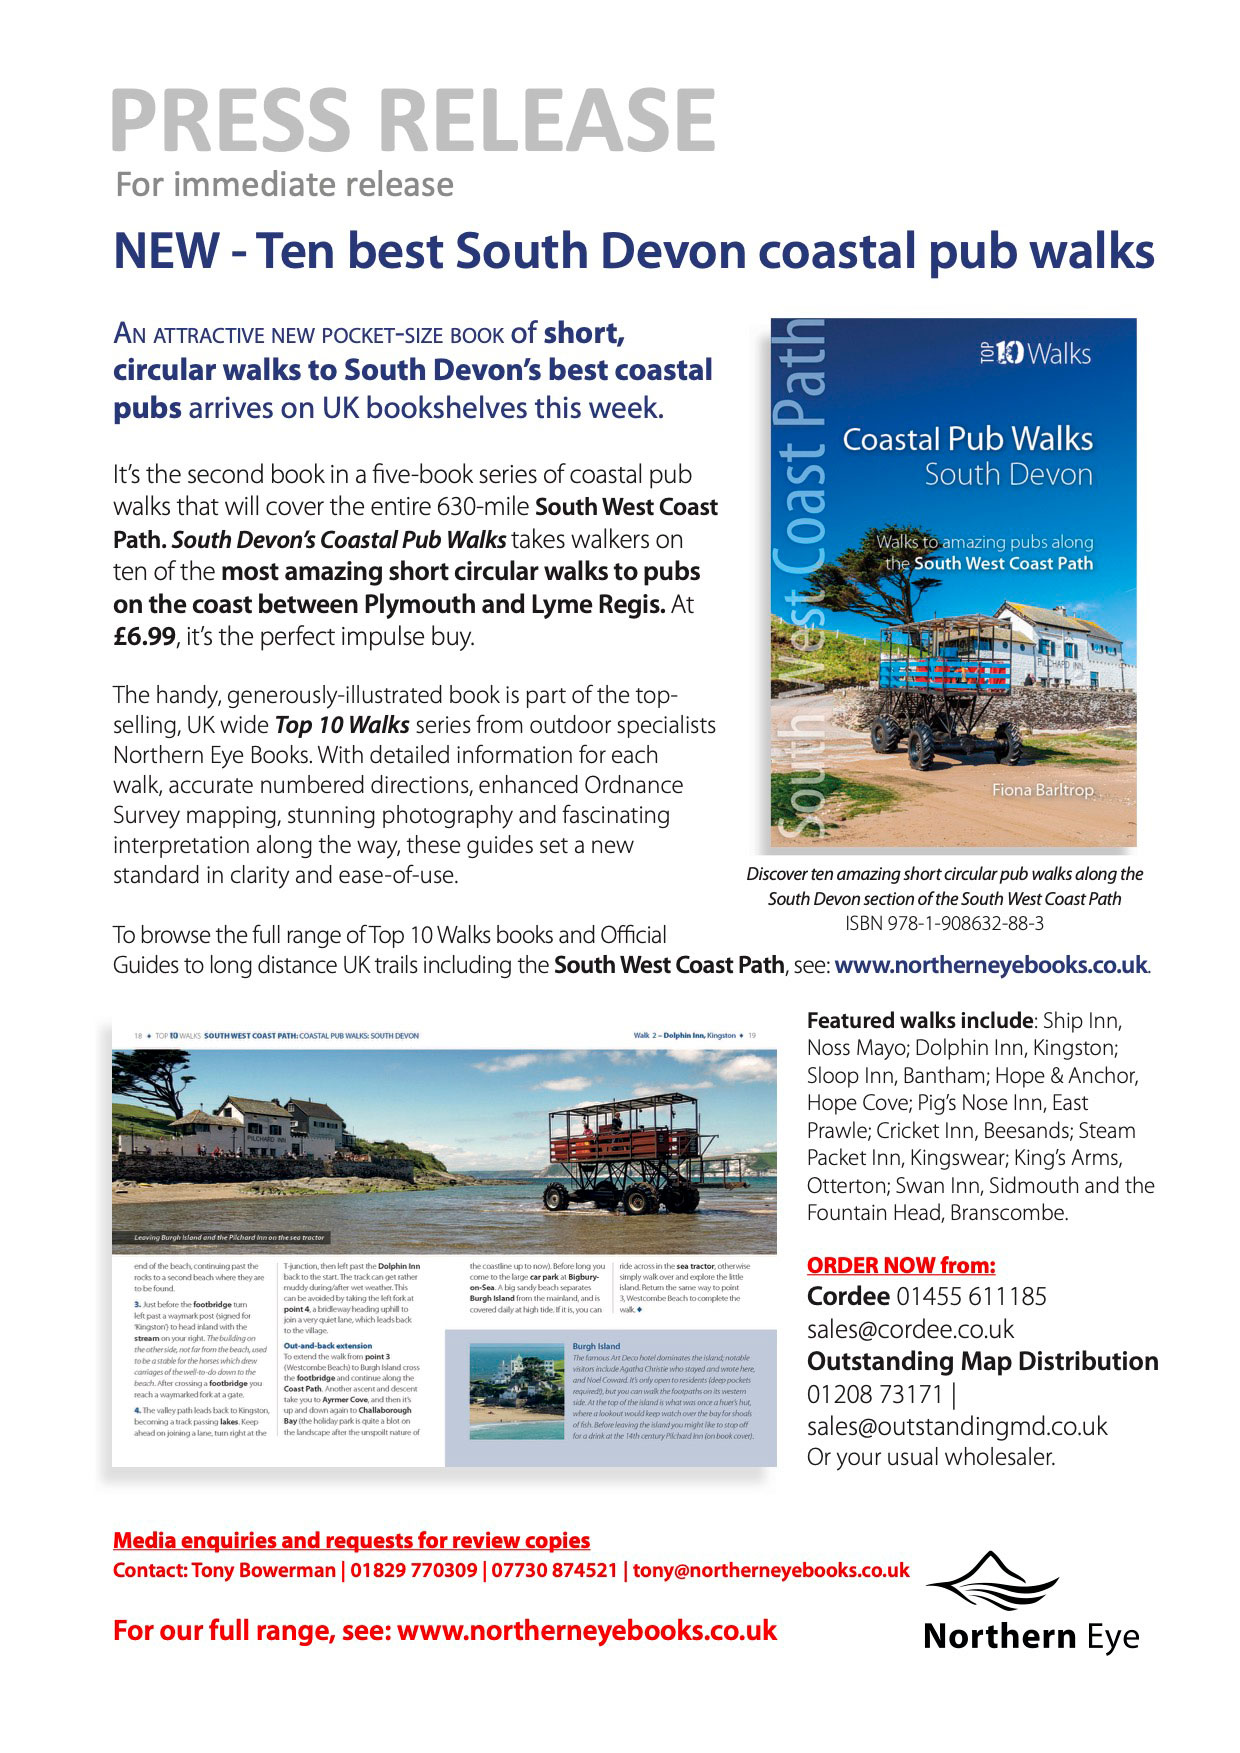 Press Release - New book - South West Coast Path: South Devon Coastal Pub walks